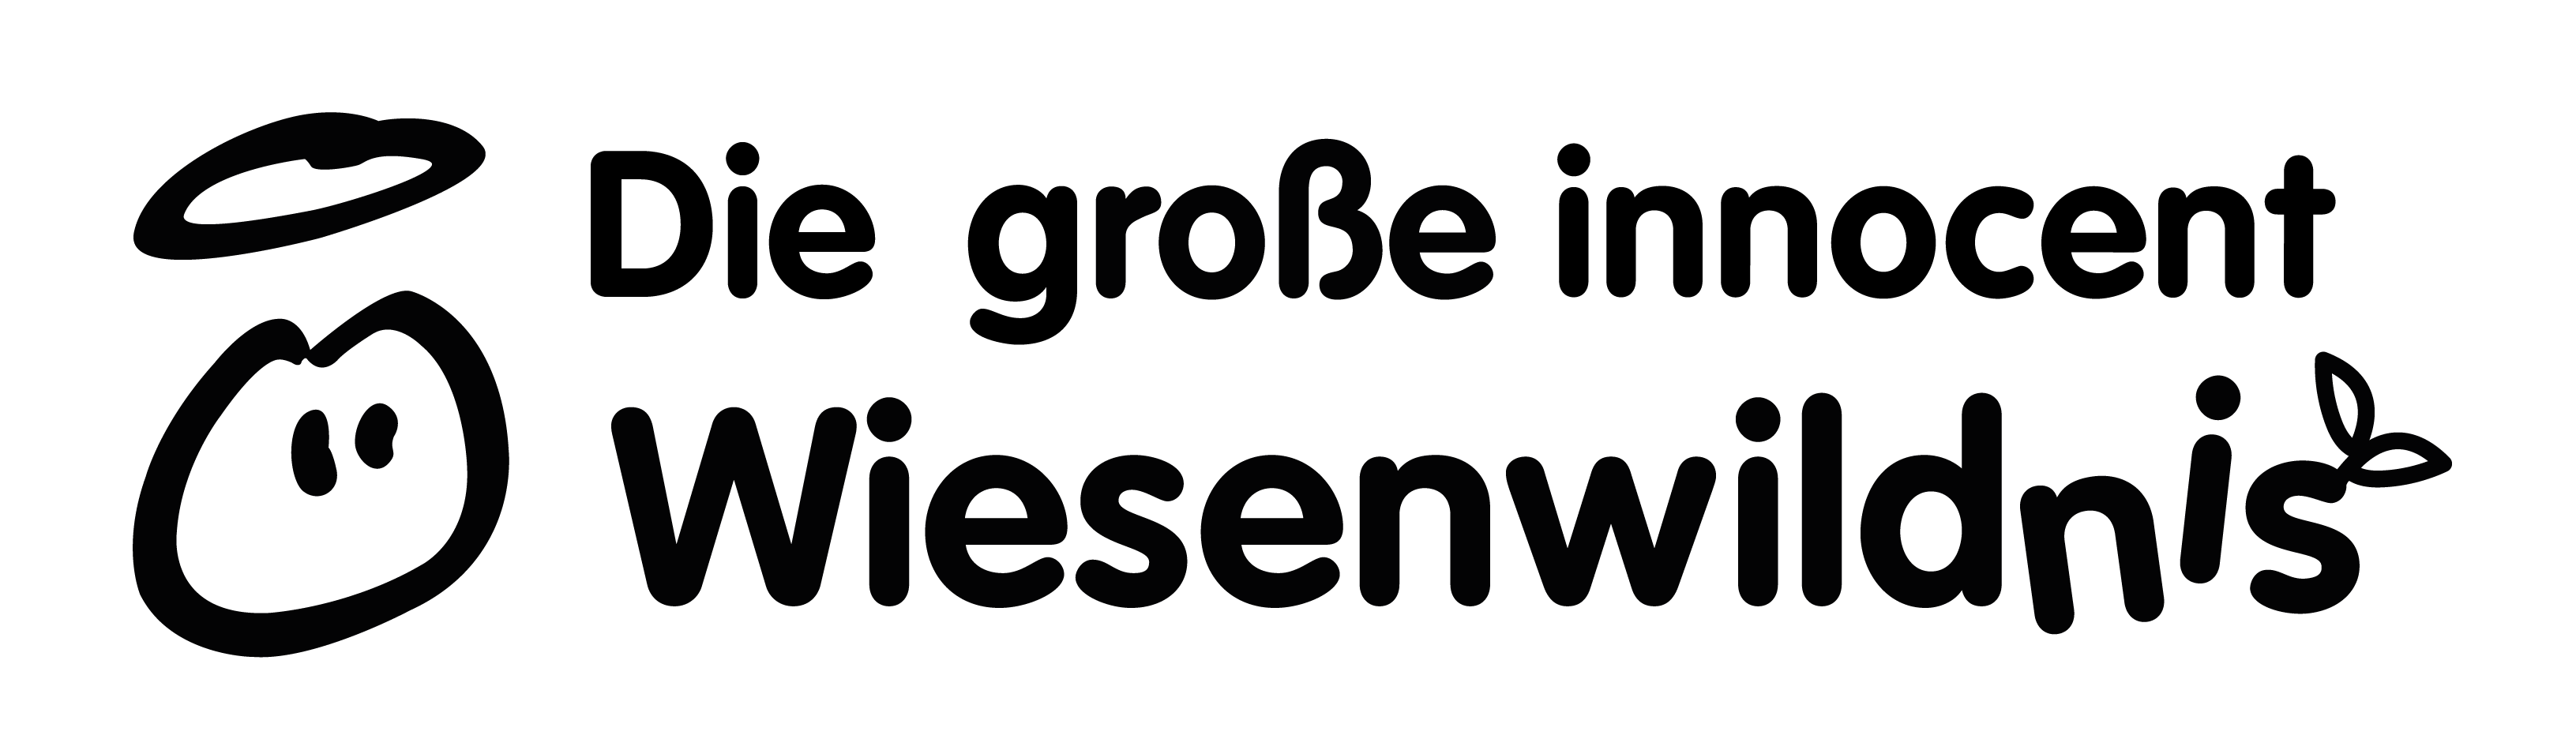 big rewild logo